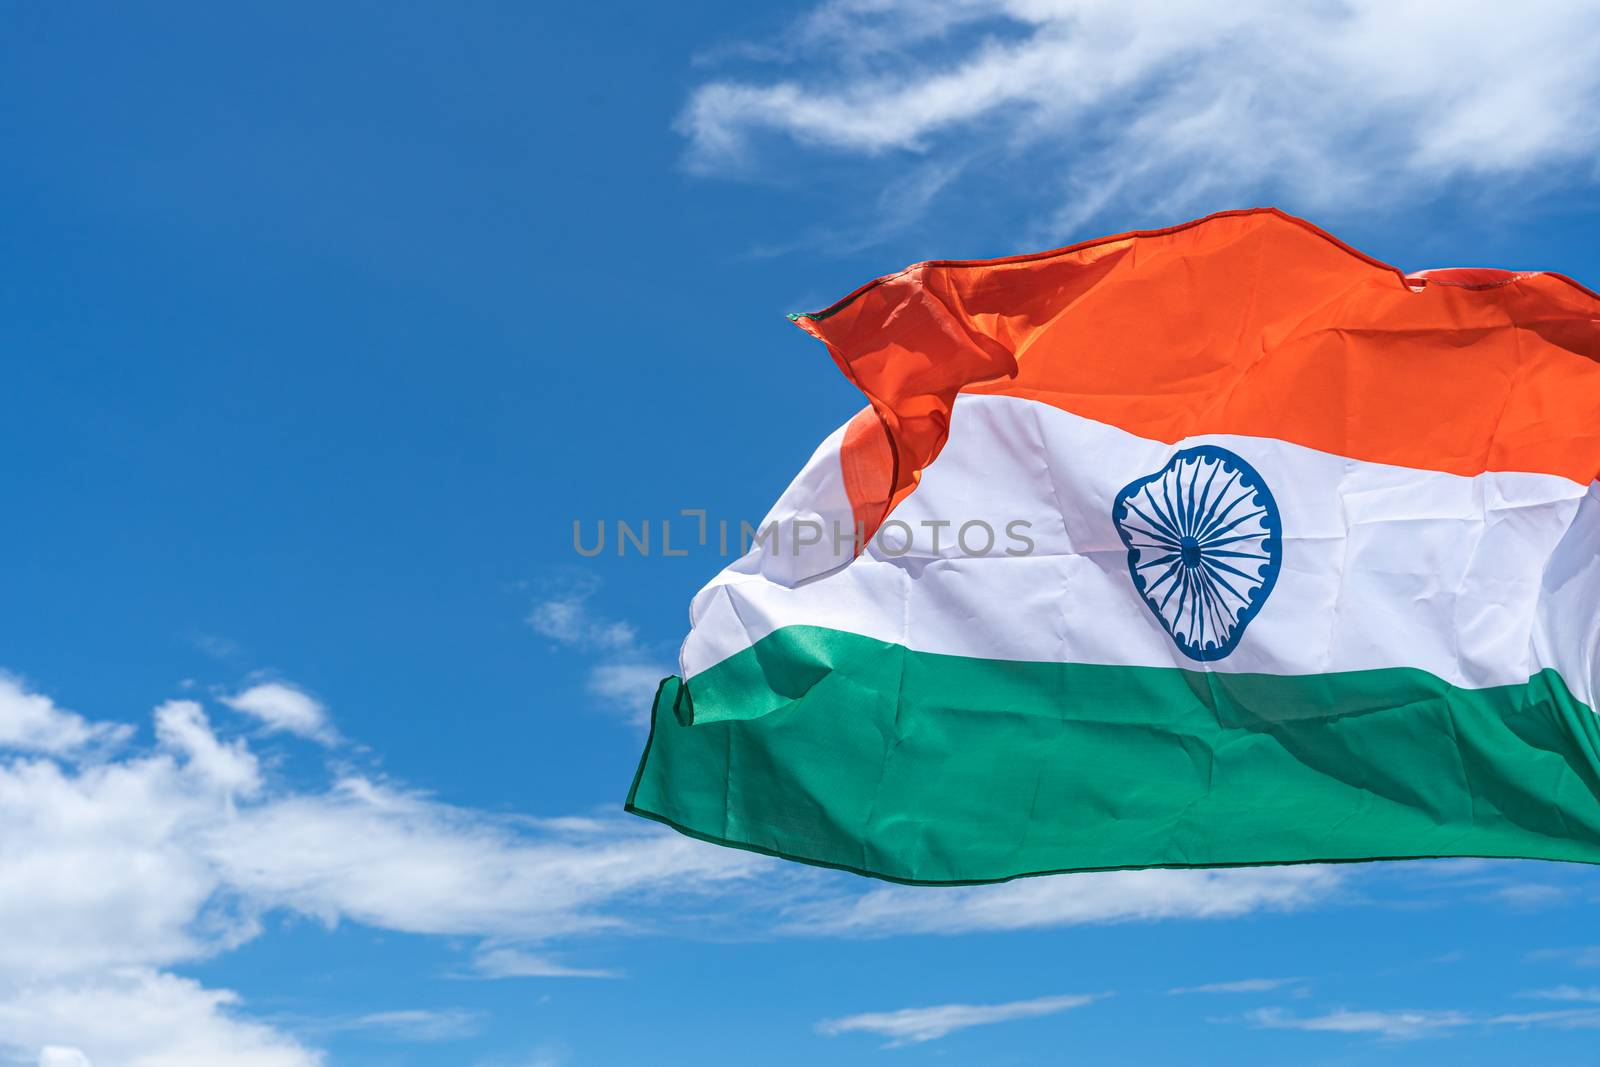 Waving India flag under blue sky background.